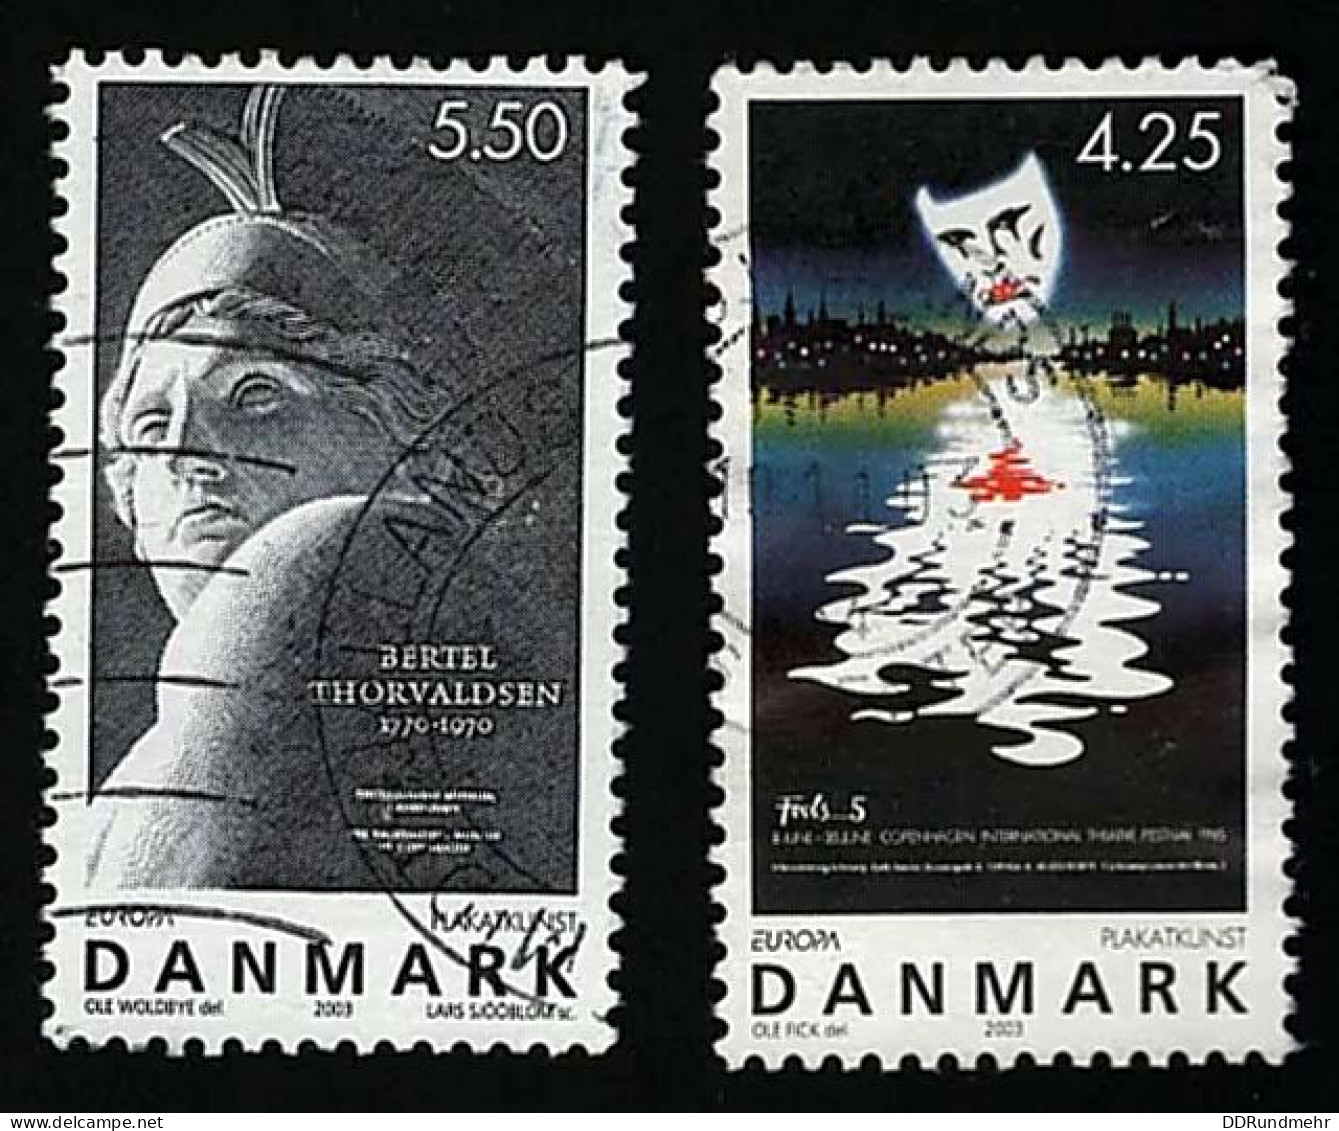 2003 Europa Michel DK 1341- 1342 Stamp Number DK 1250 - 1251 Yvert Et Tellier DK 1344 - 1345 Used - Used Stamps